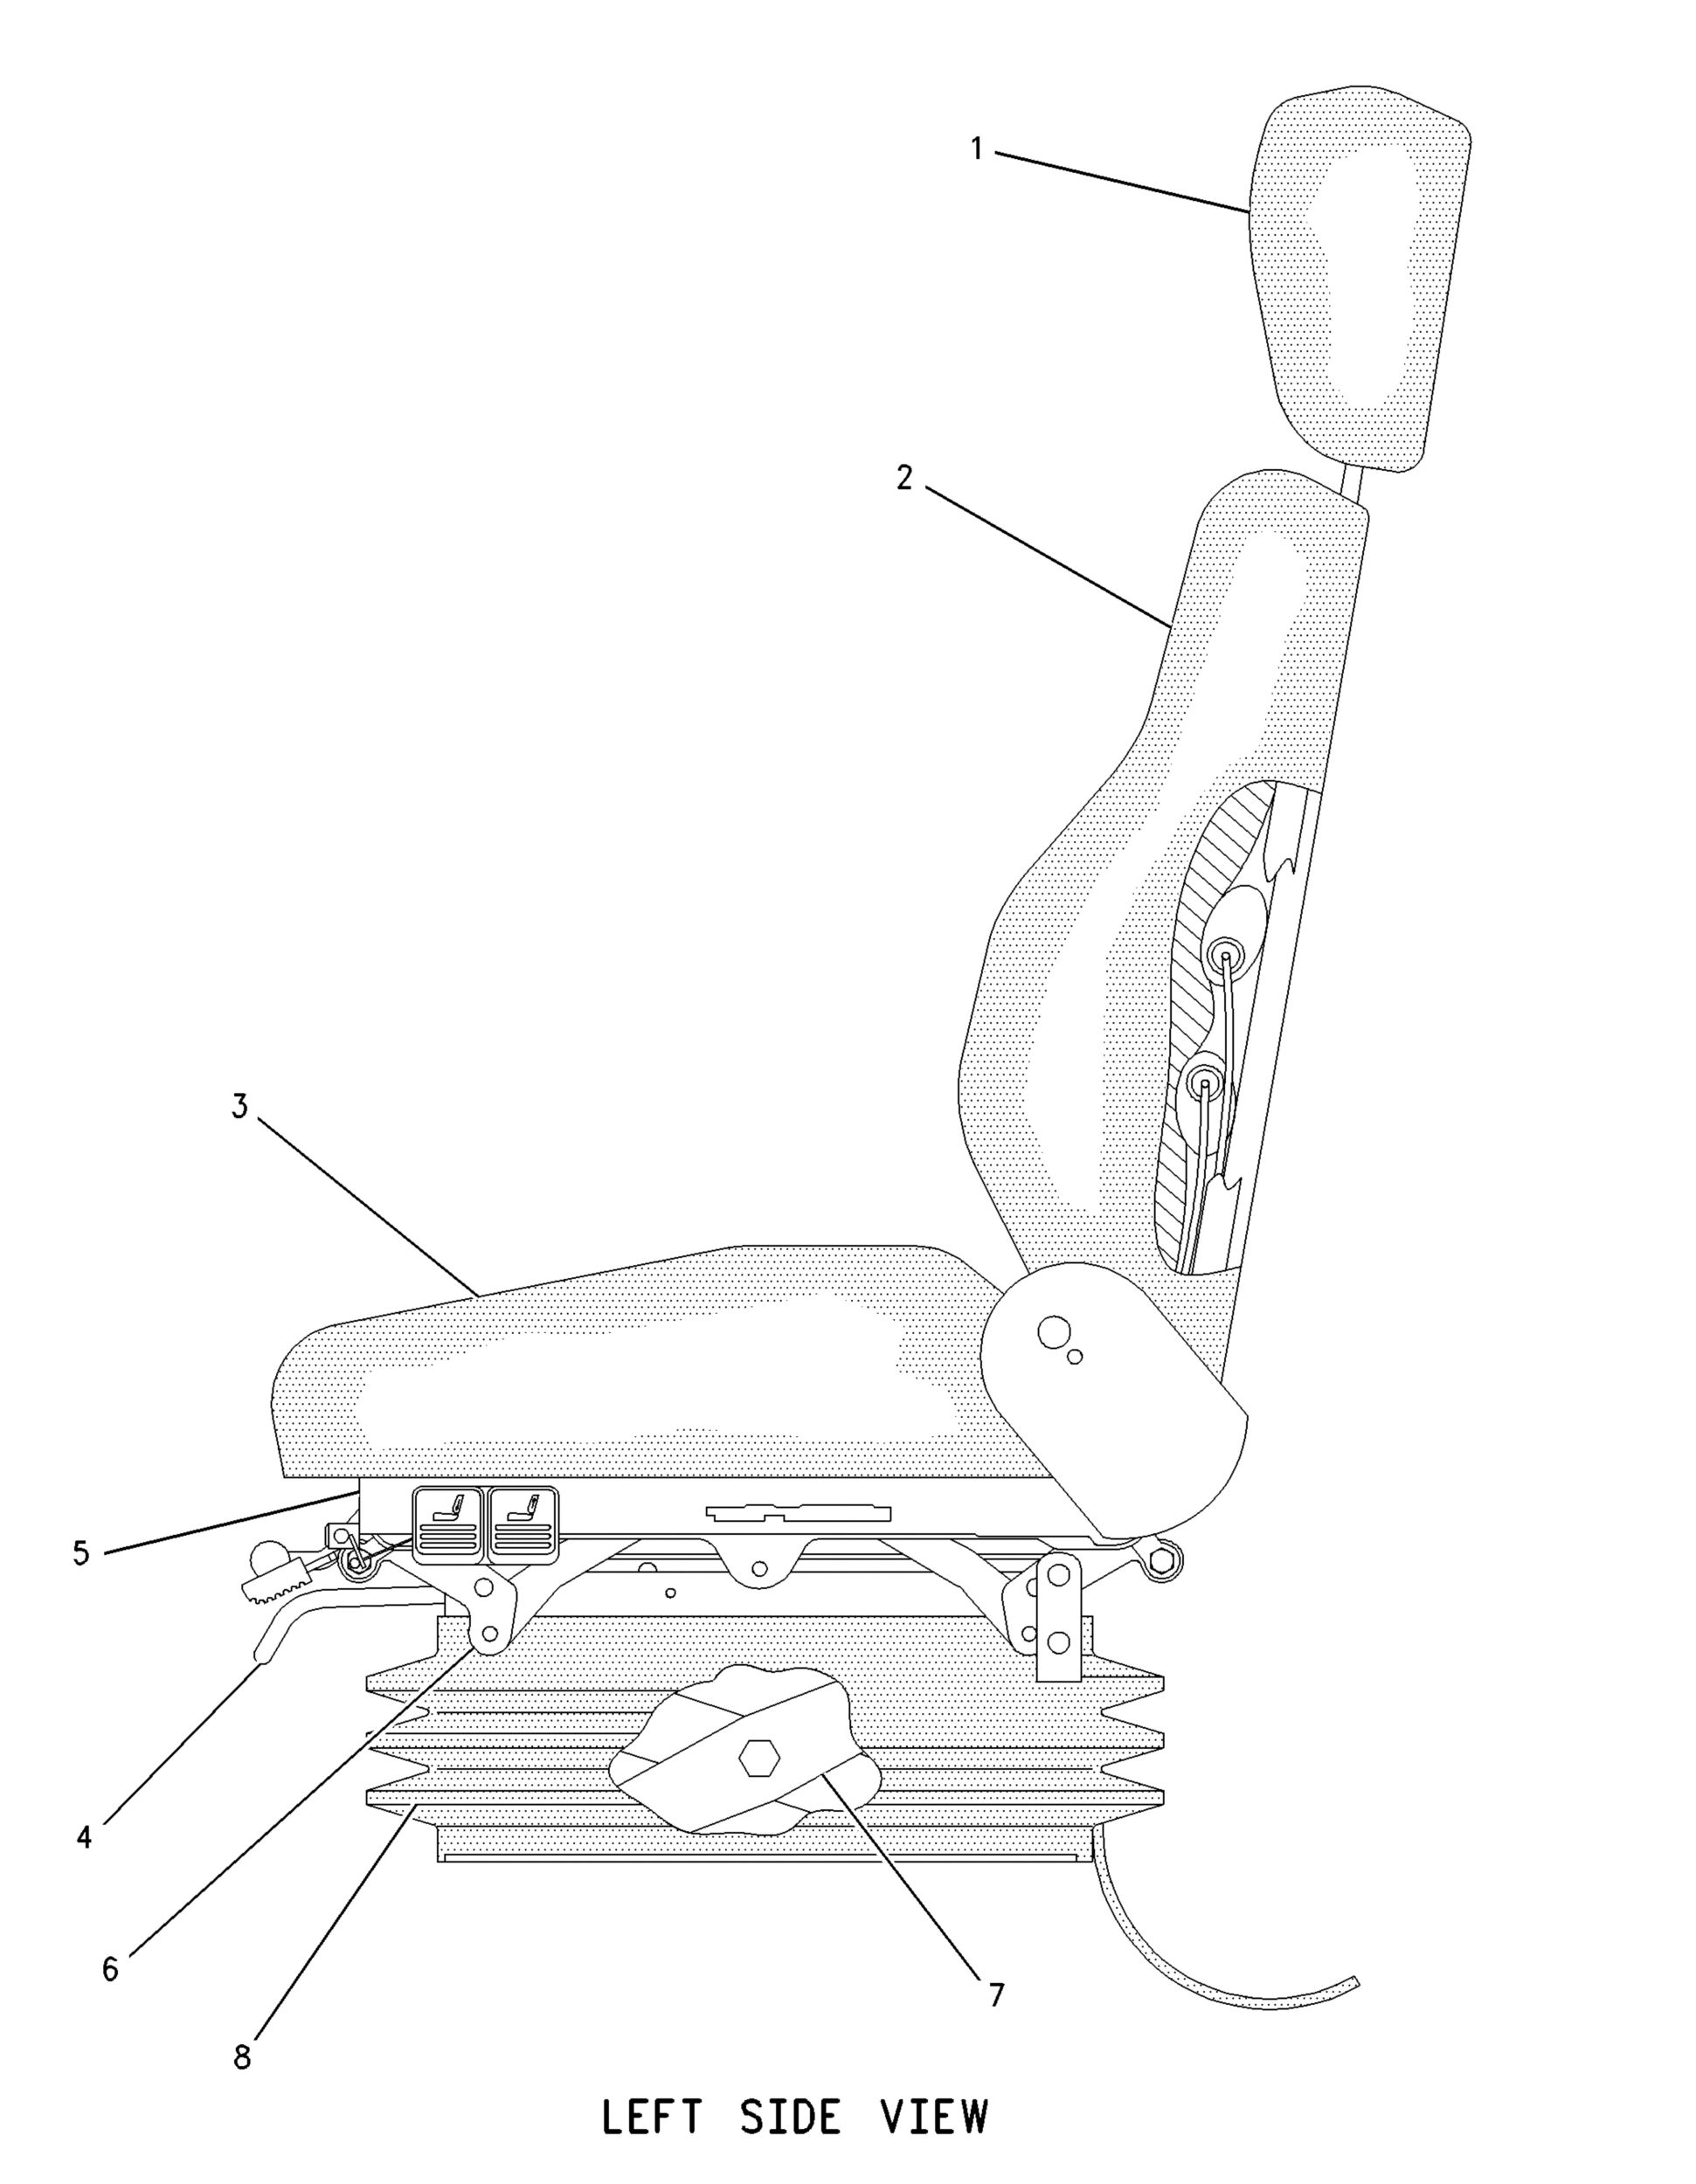 CAT Caterpillar Suspension Seat Replacement Cushion Kit, COMPACT WHEEL  LOADER #JTG